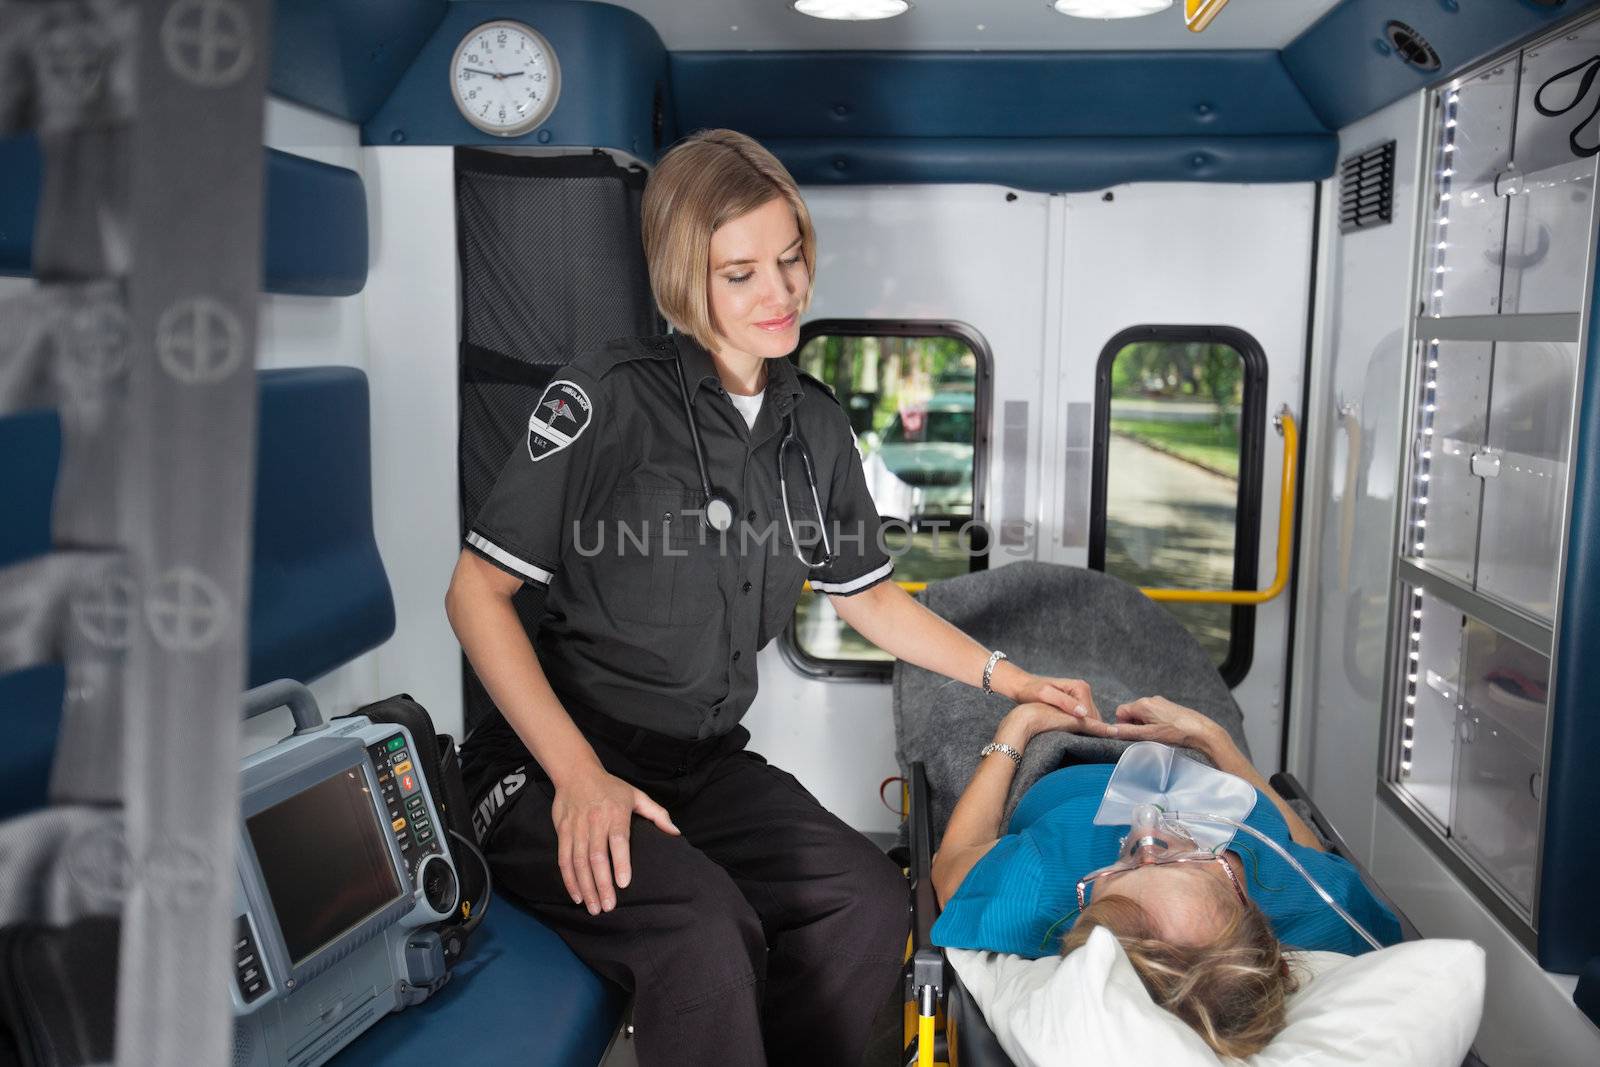 Female EMT worker showing care to senior woman patient inside ambulance